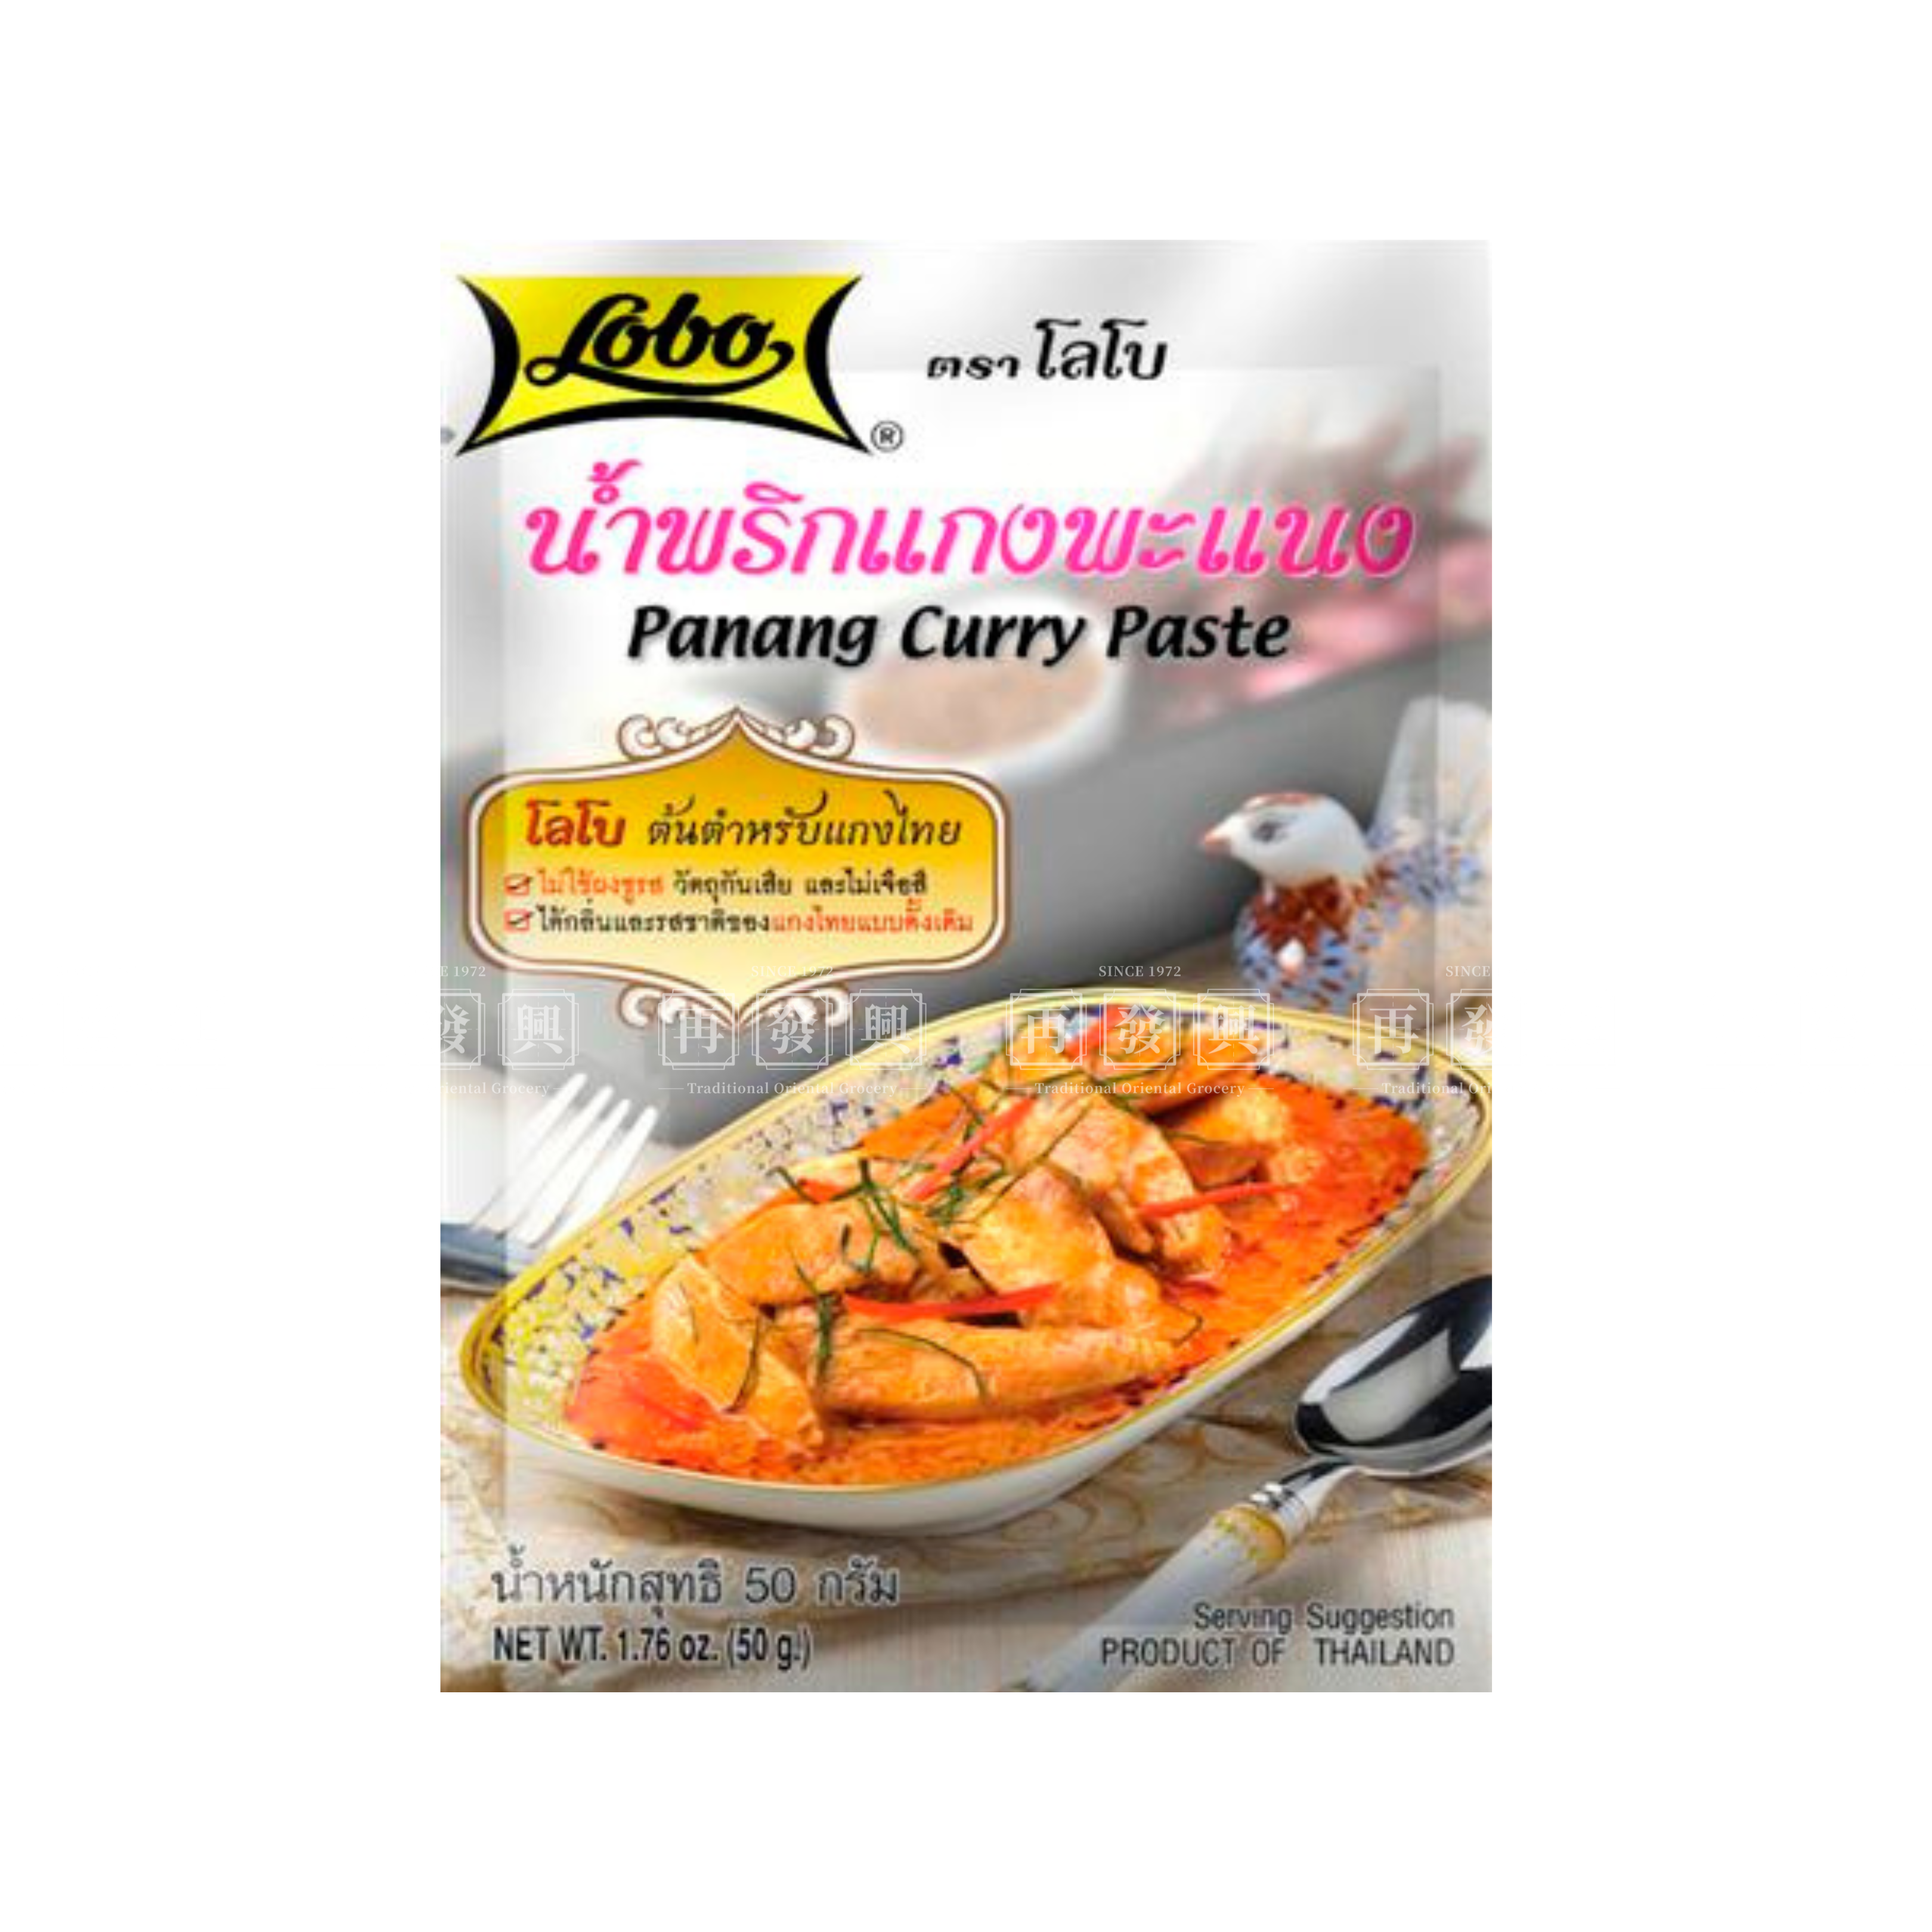 Globo Thailand Panang Curry Paste 泰国帕能咖喱酱 50g